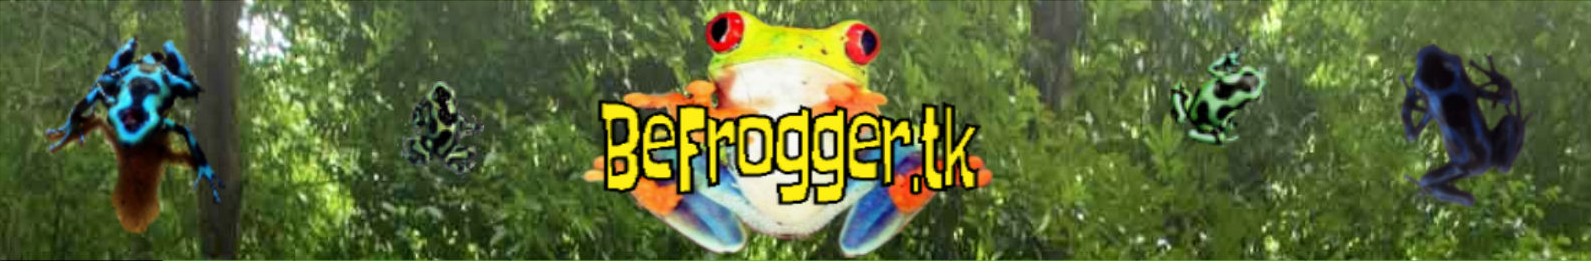 Be Frogger